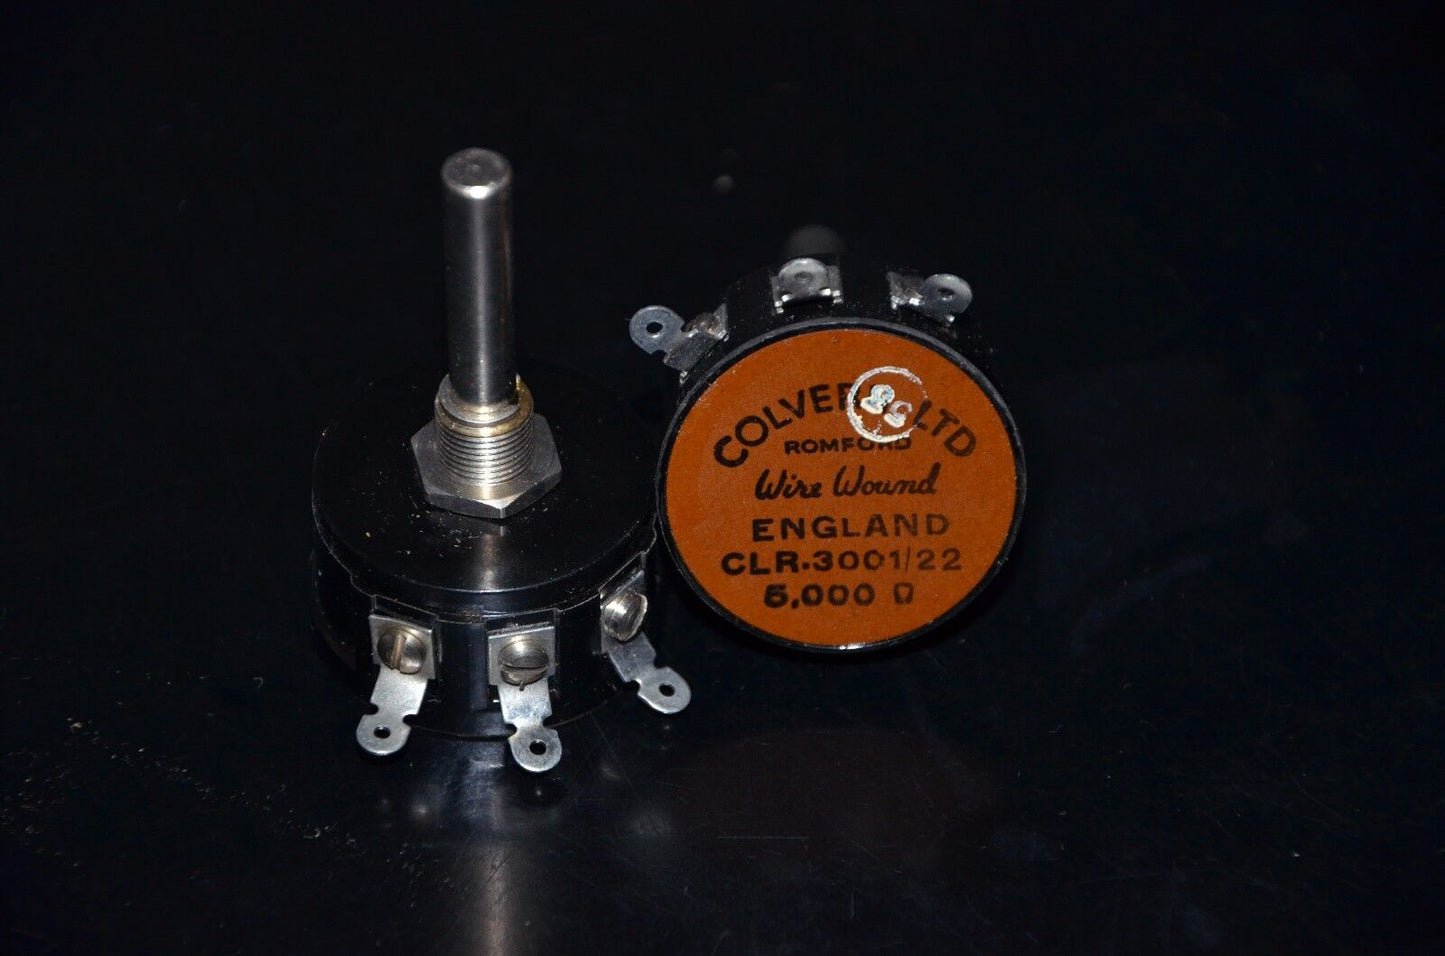 Two (2) NOS Colvern vintage wire wound potentiometers 5000 Ohm 3W CLR.3001/22